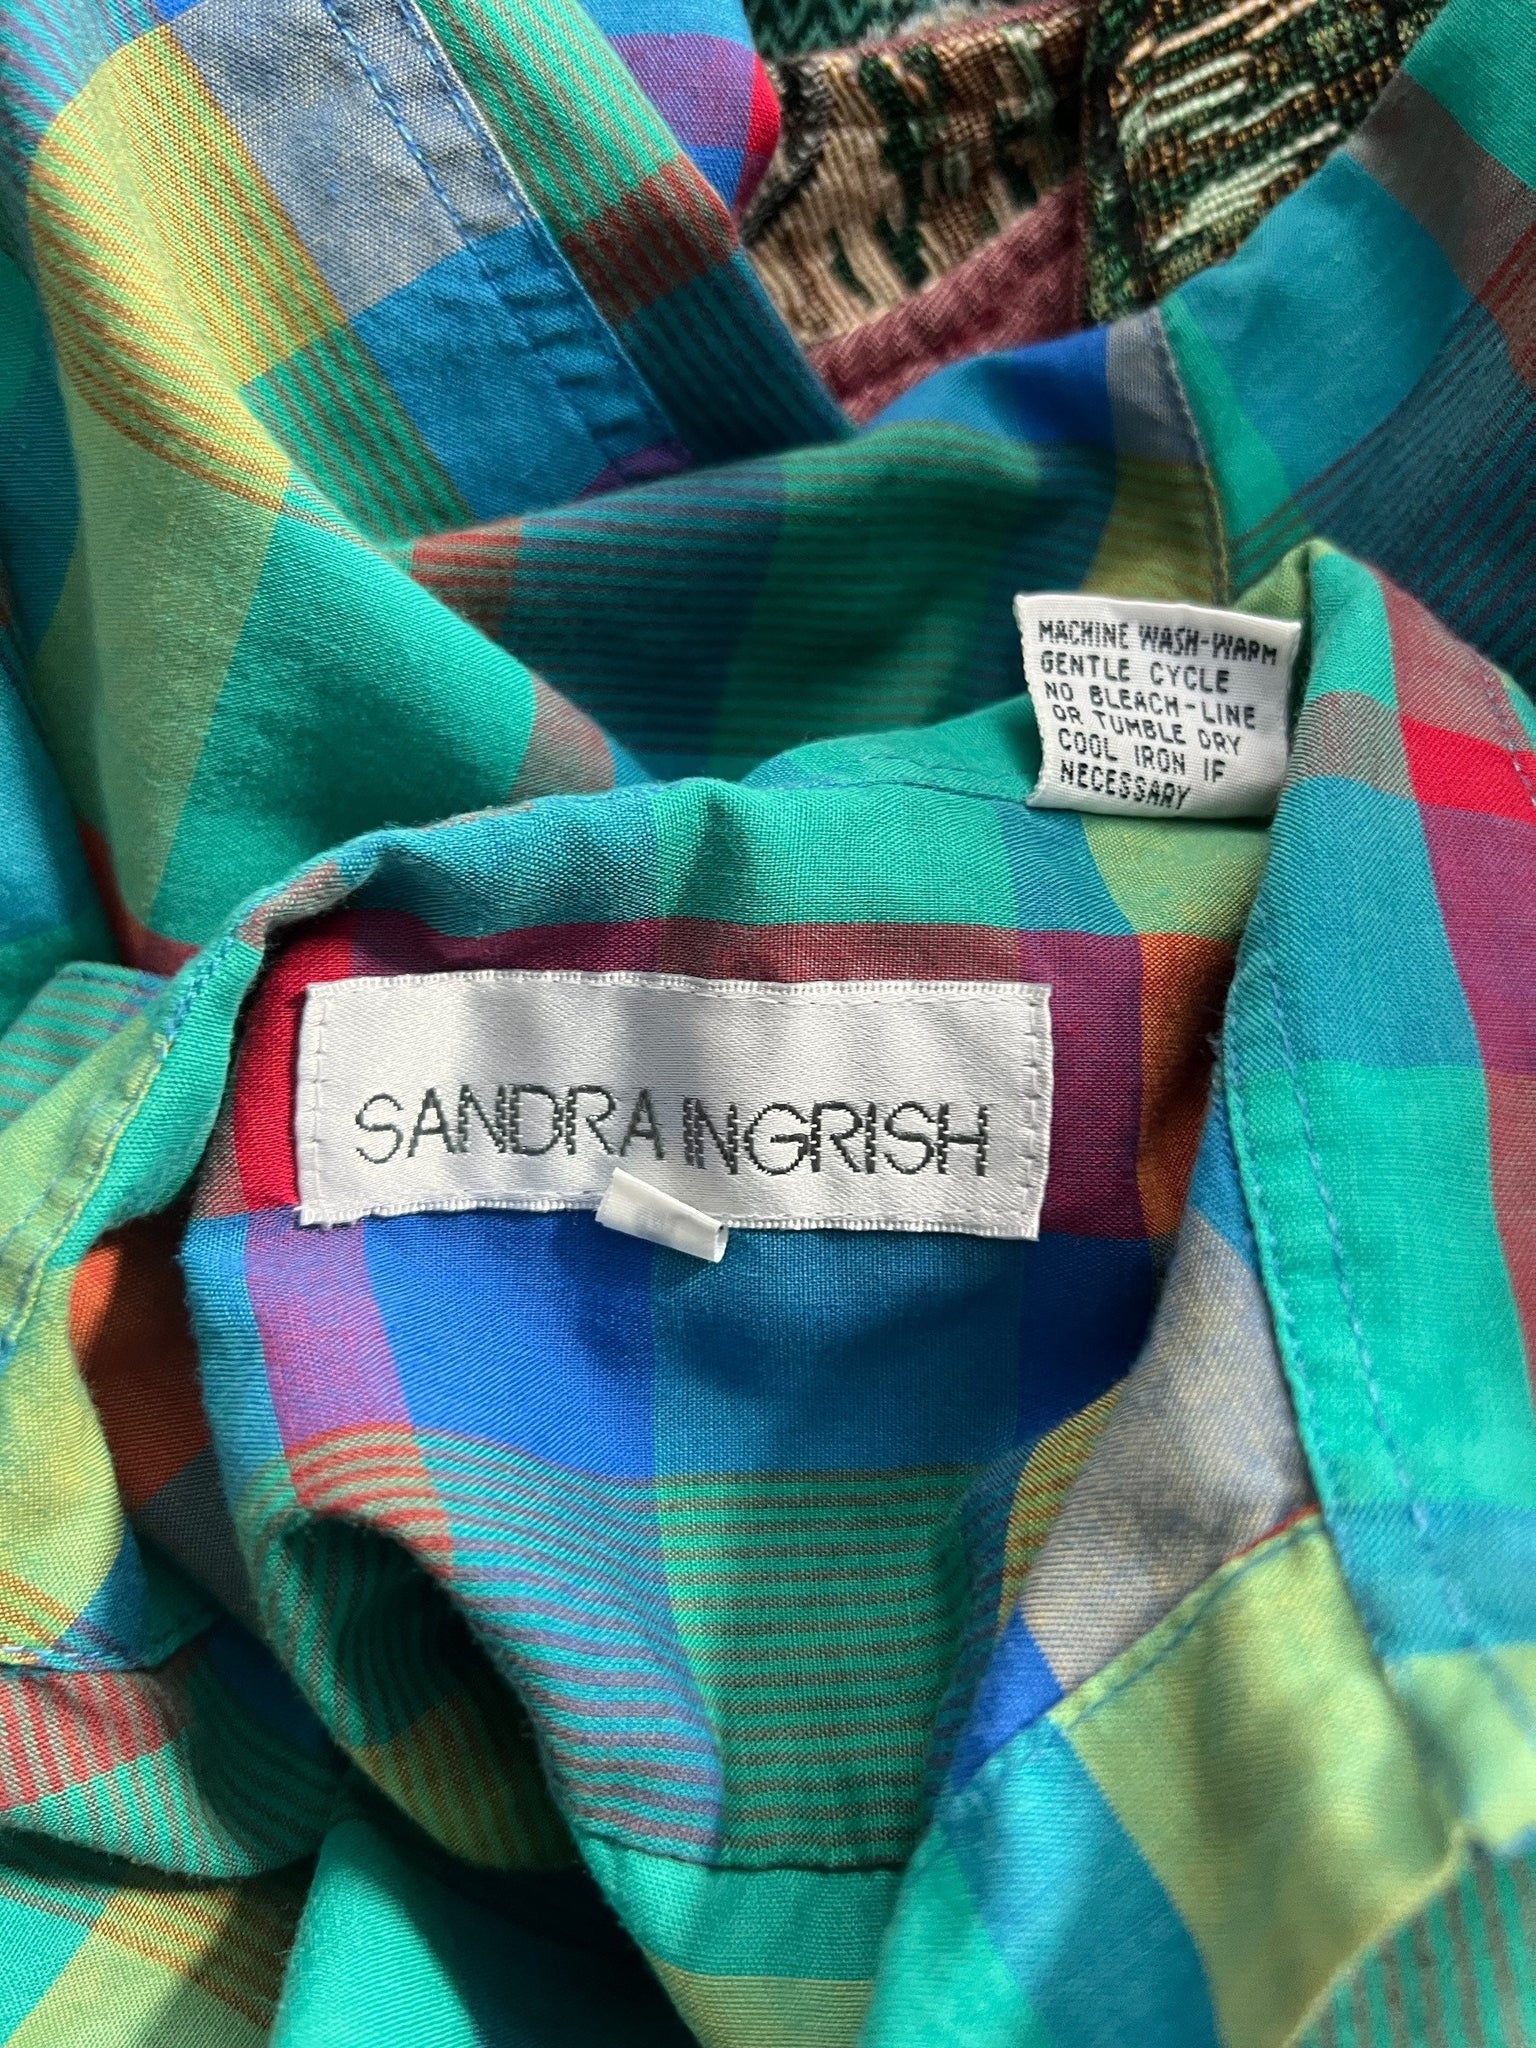 Vintage 80'a plaid shirt 8 M Sandra Ingrish